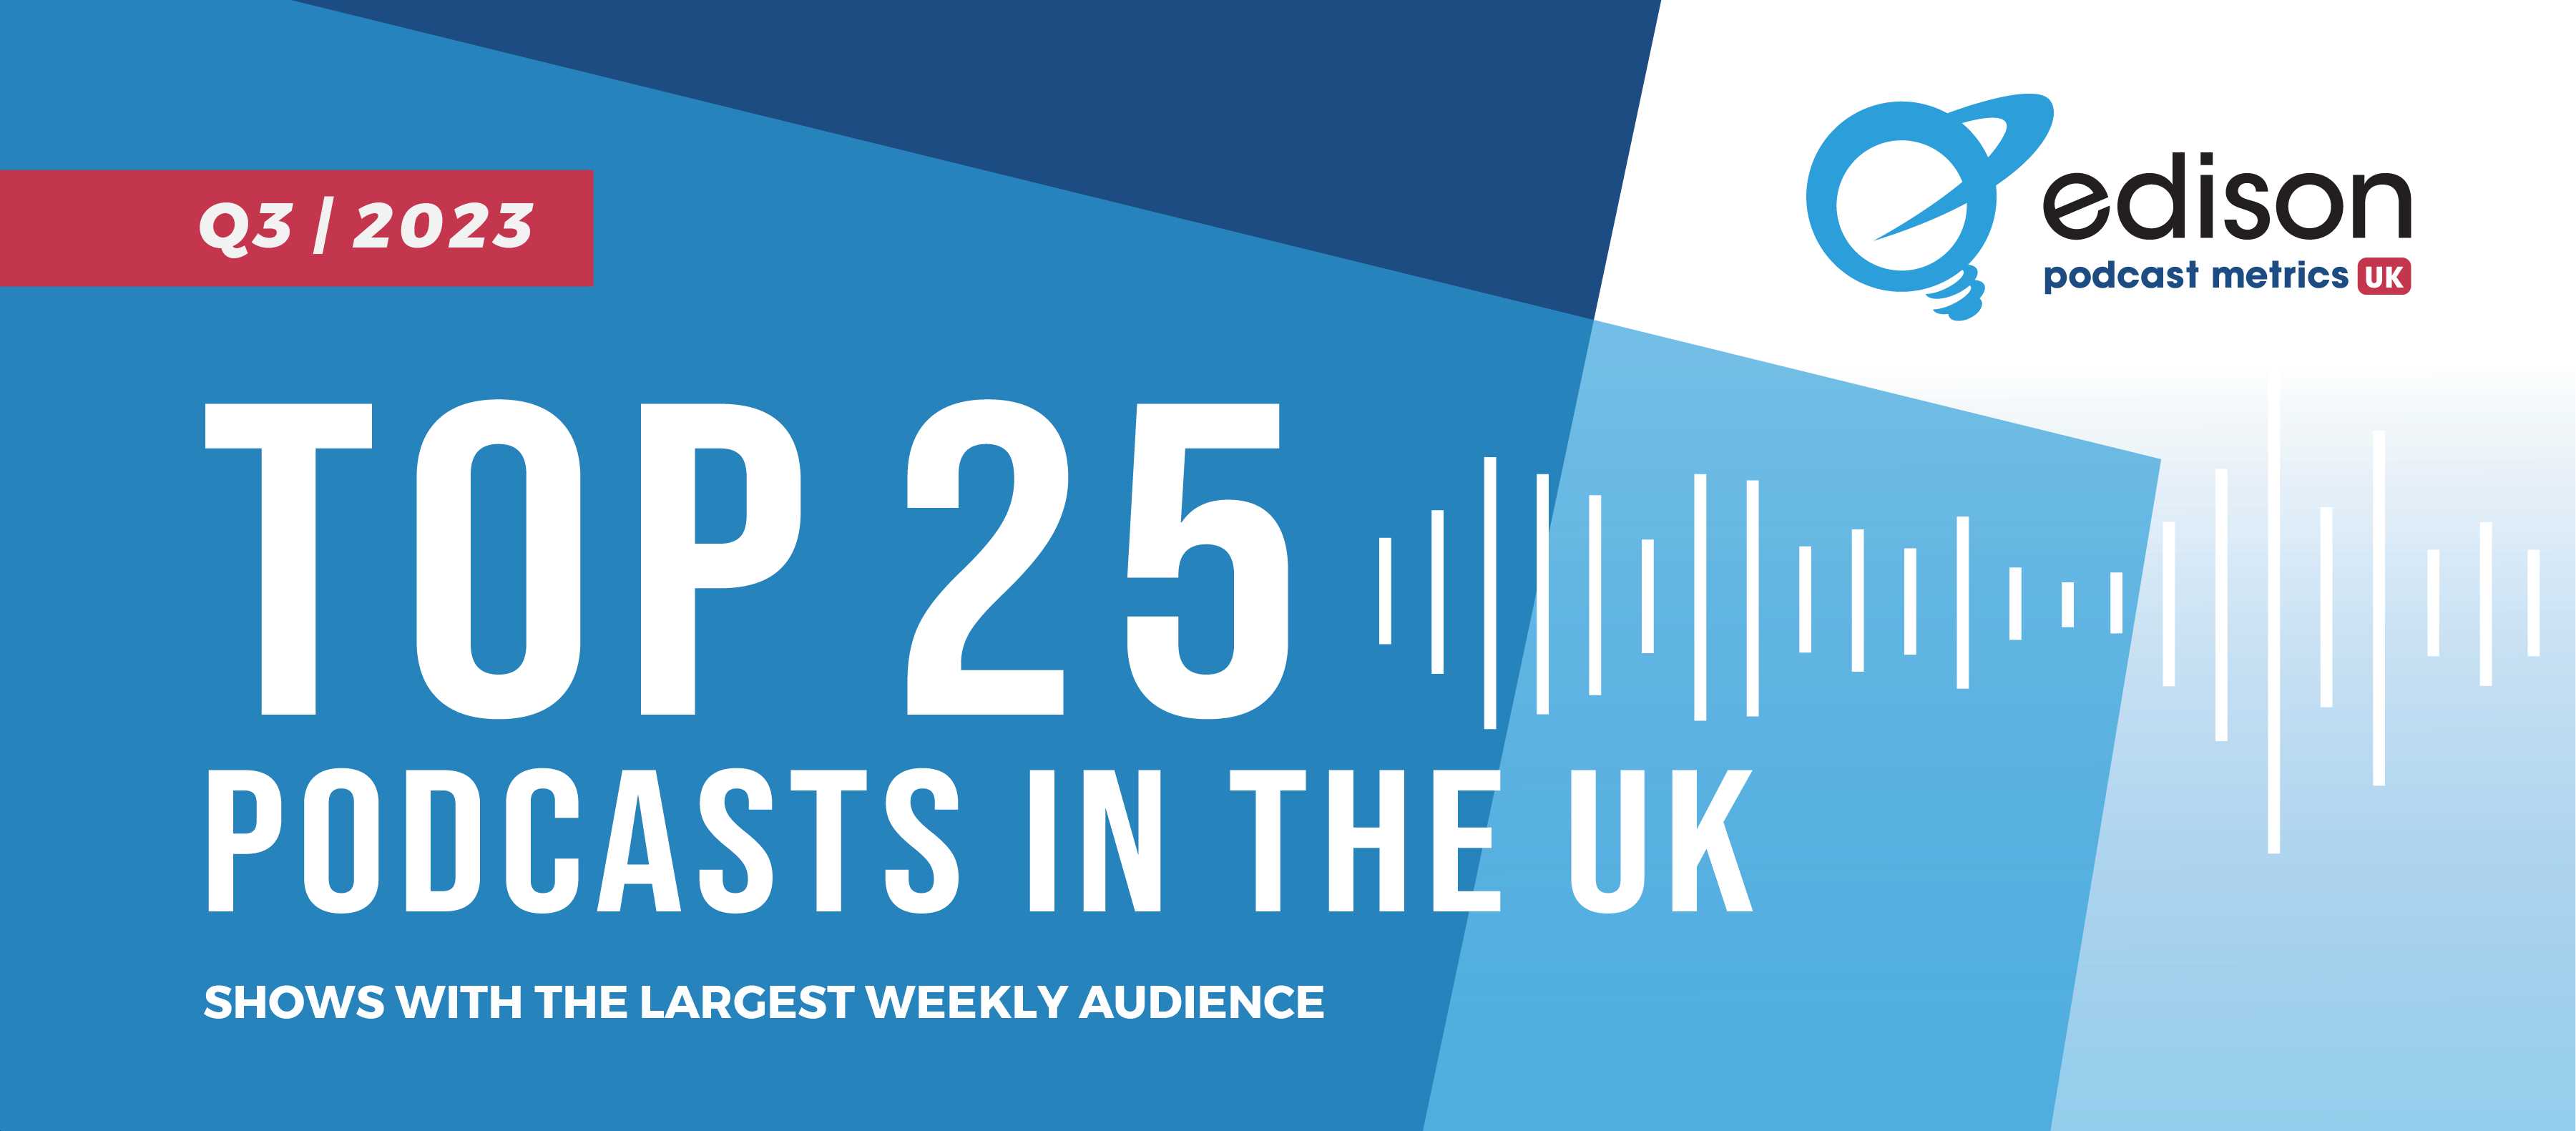 Edison Podcast Metrics UK – Top 25 Q3 2023